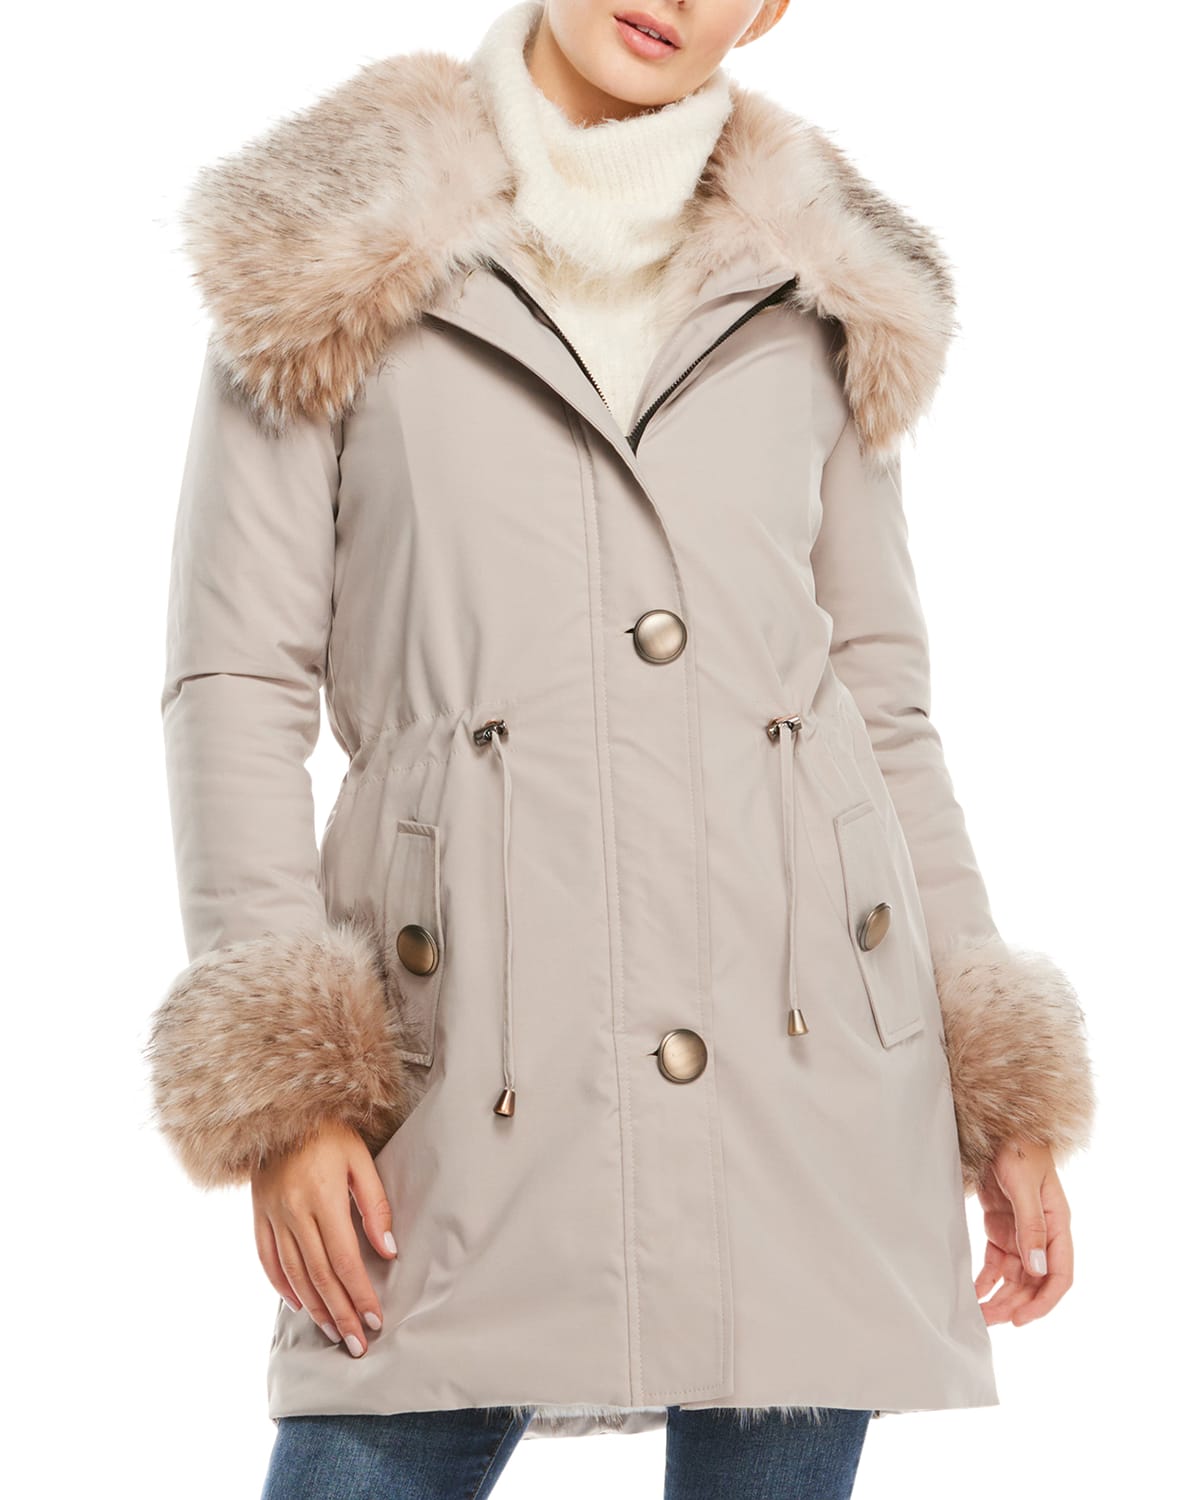 Fabulous Furs Anorak Storm Coat